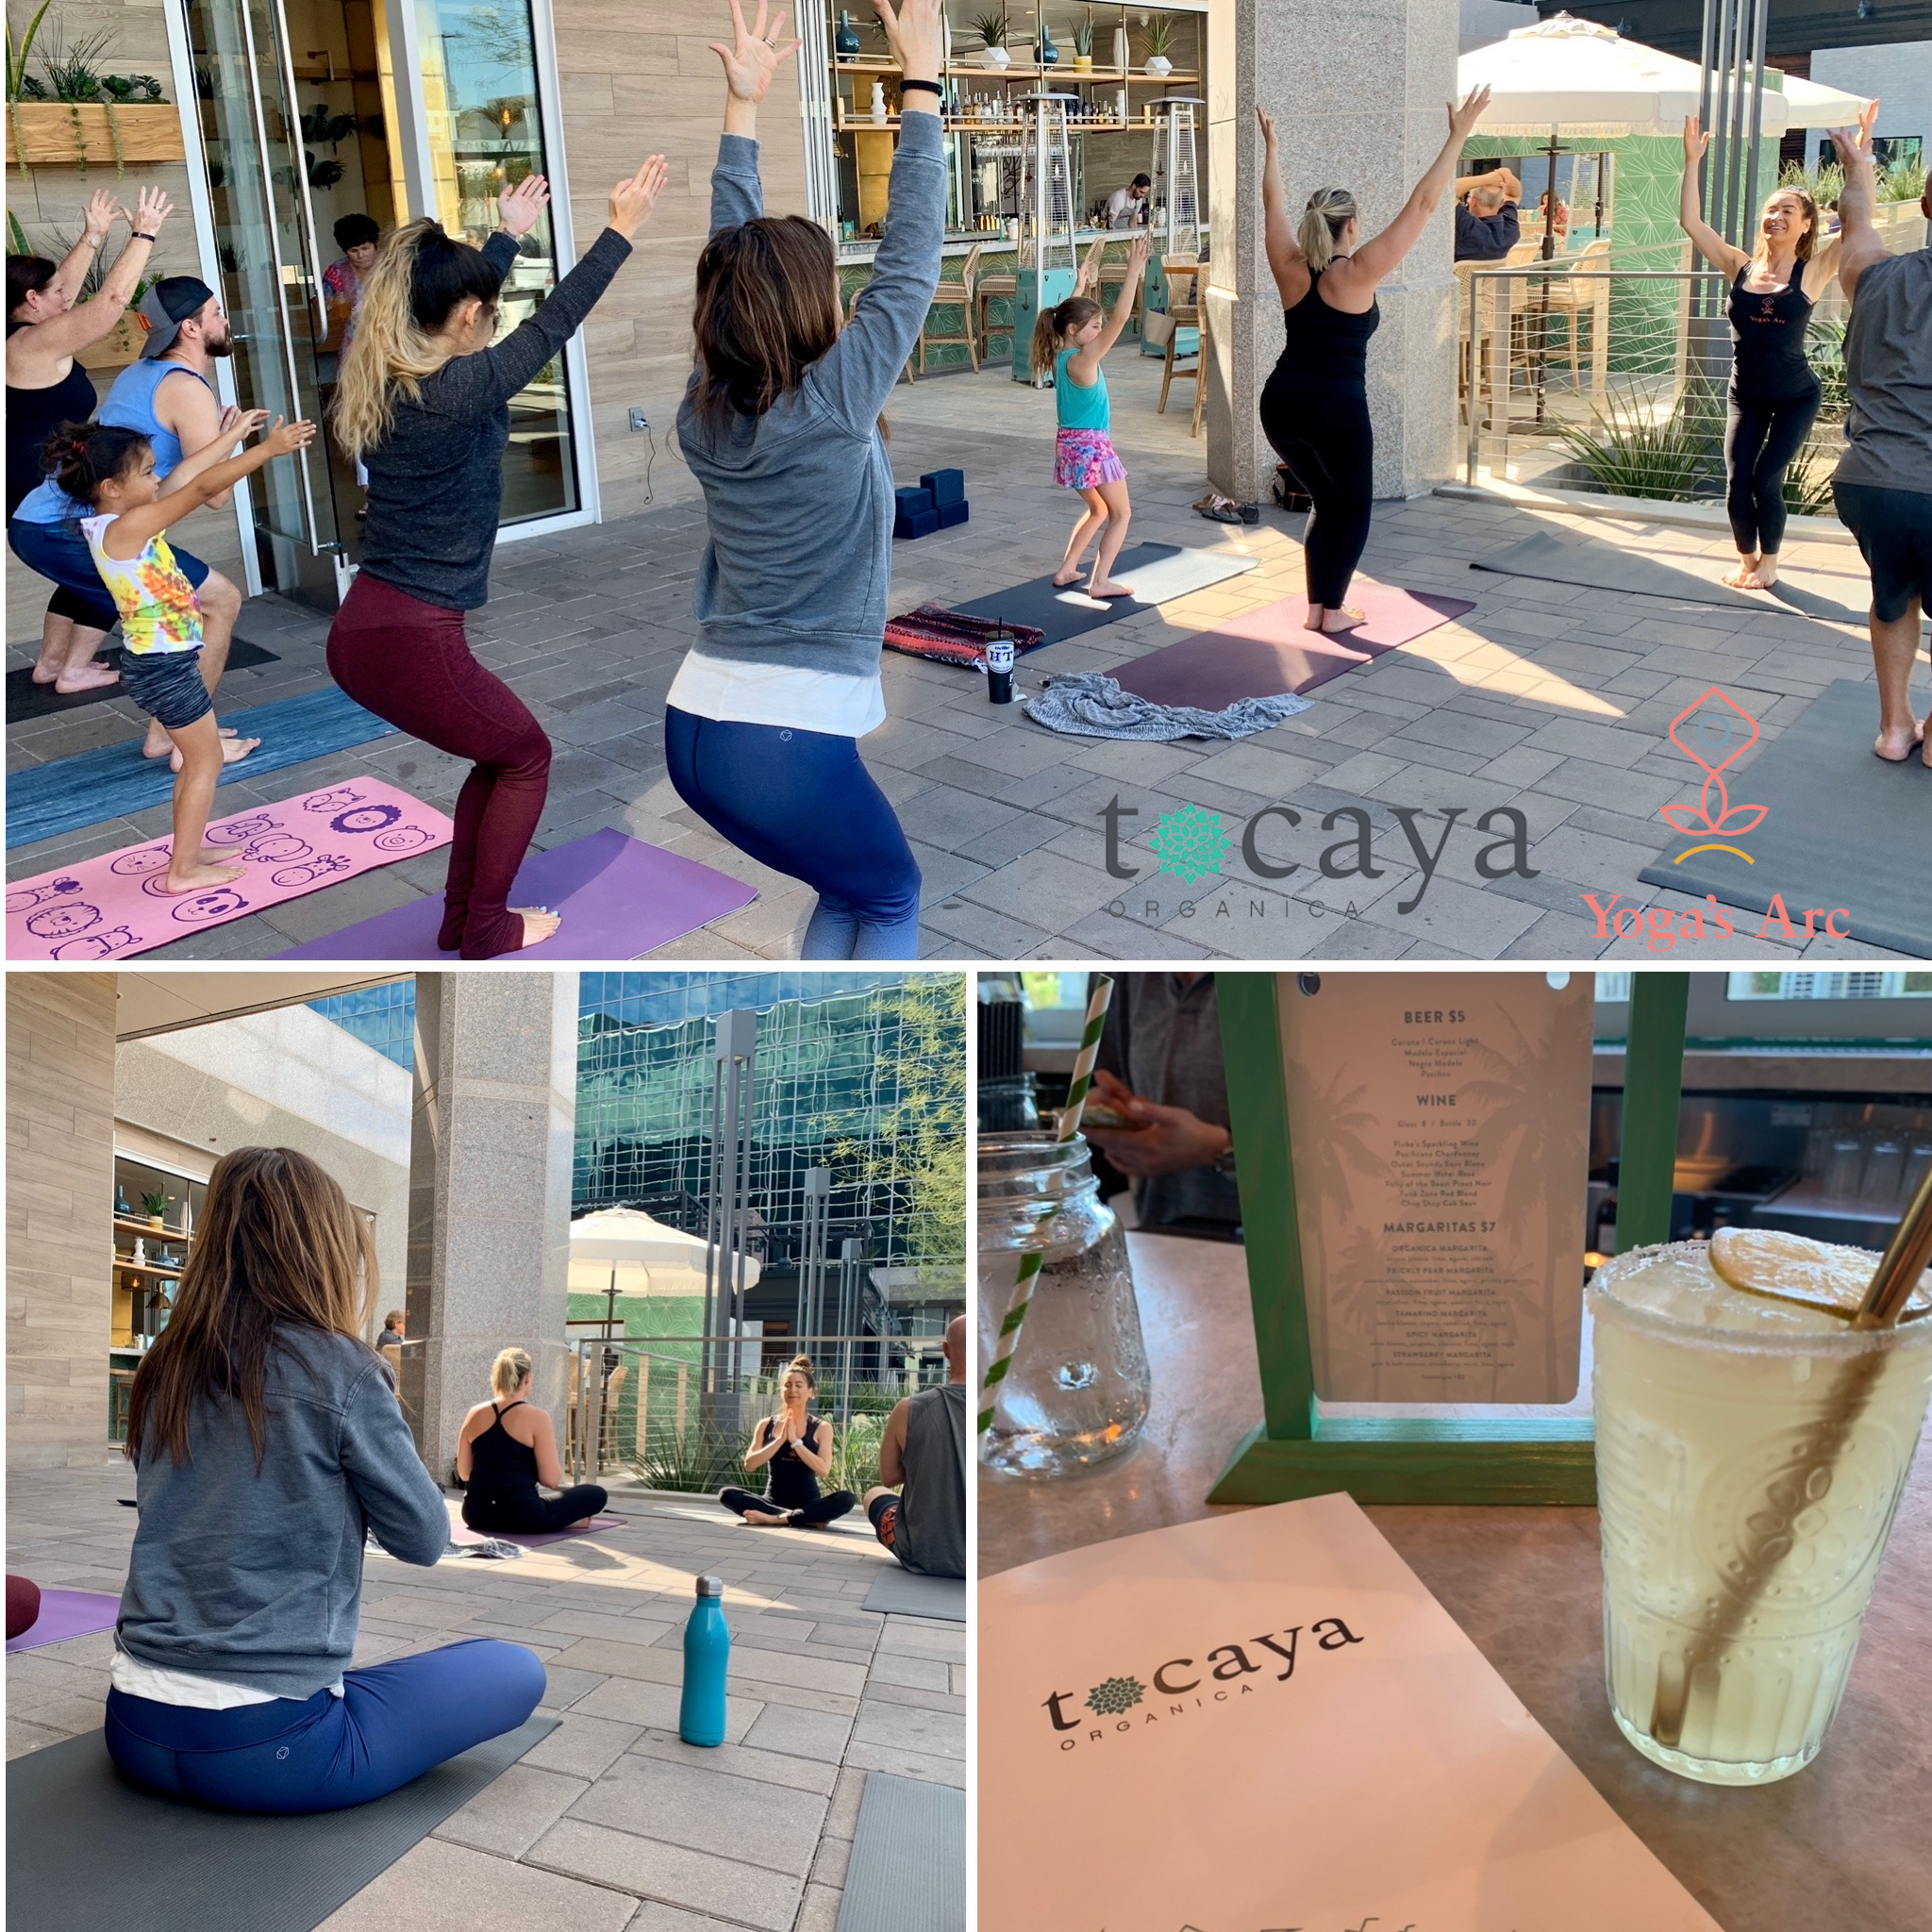 All Levels Yoga at Tocaya Organica (Esplanade Center Location)